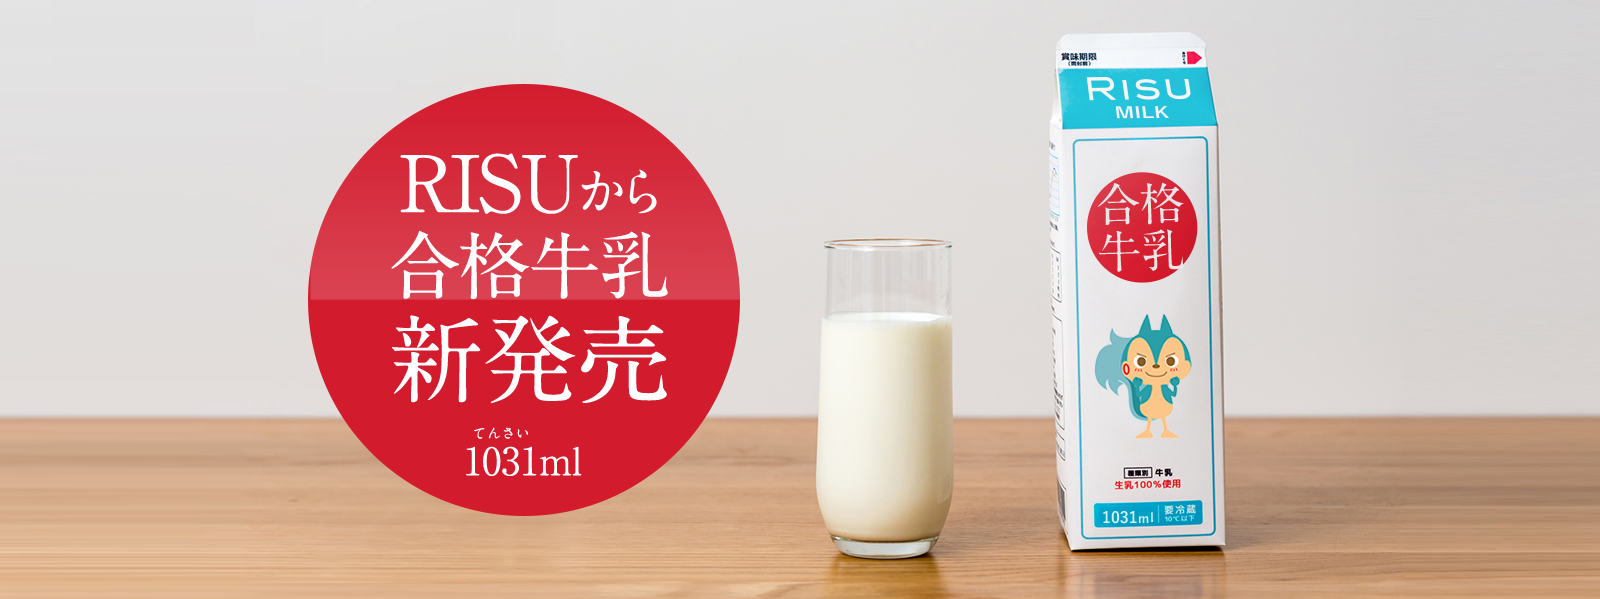 RISUから合格牛乳 新発売 1031ml